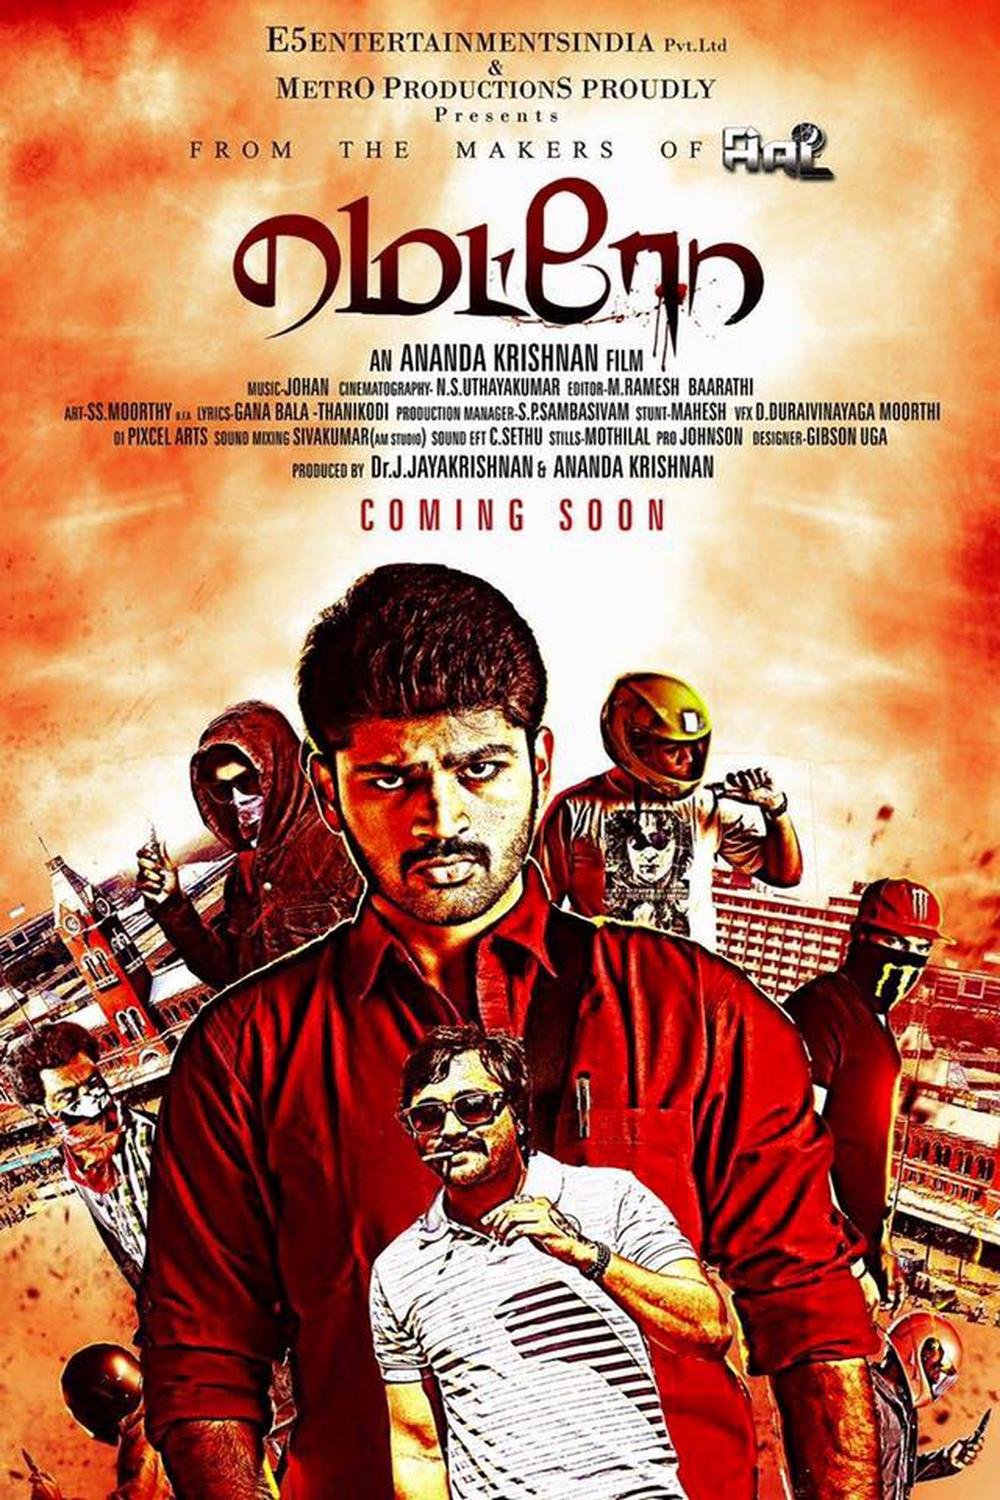 Tamil poster of the movie Metro